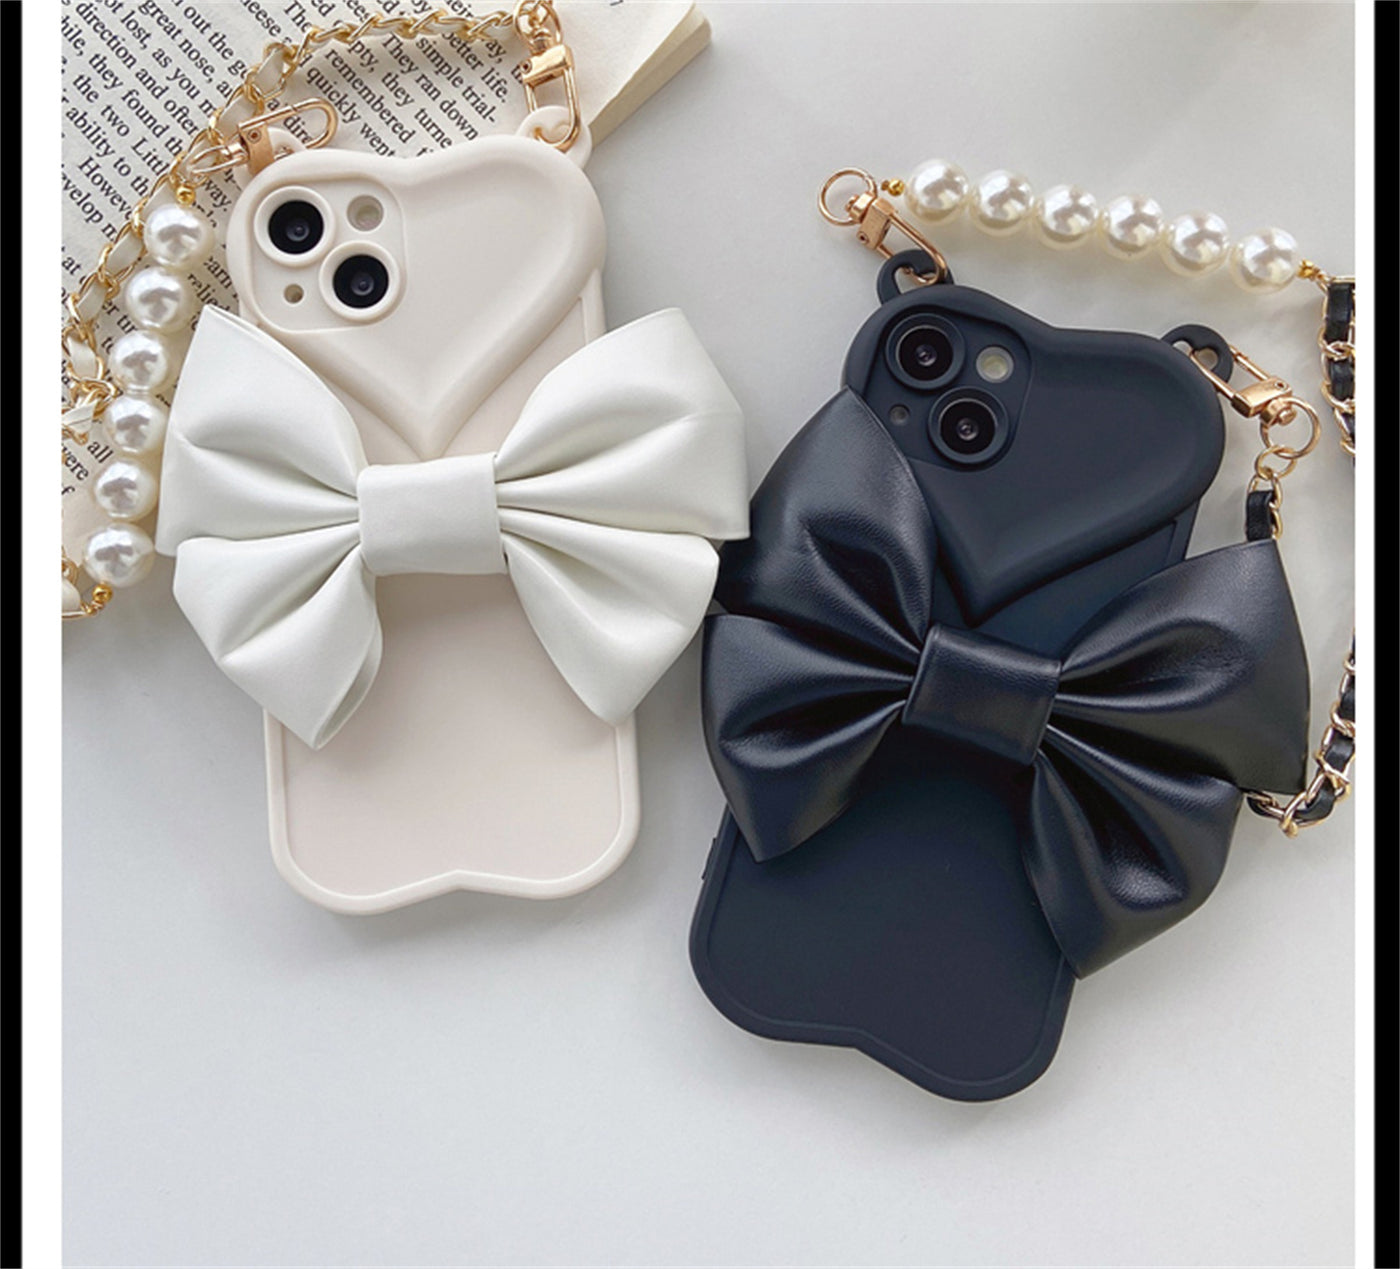 Luxury Heart & Leather Bow Bracelet Chain Phone Case